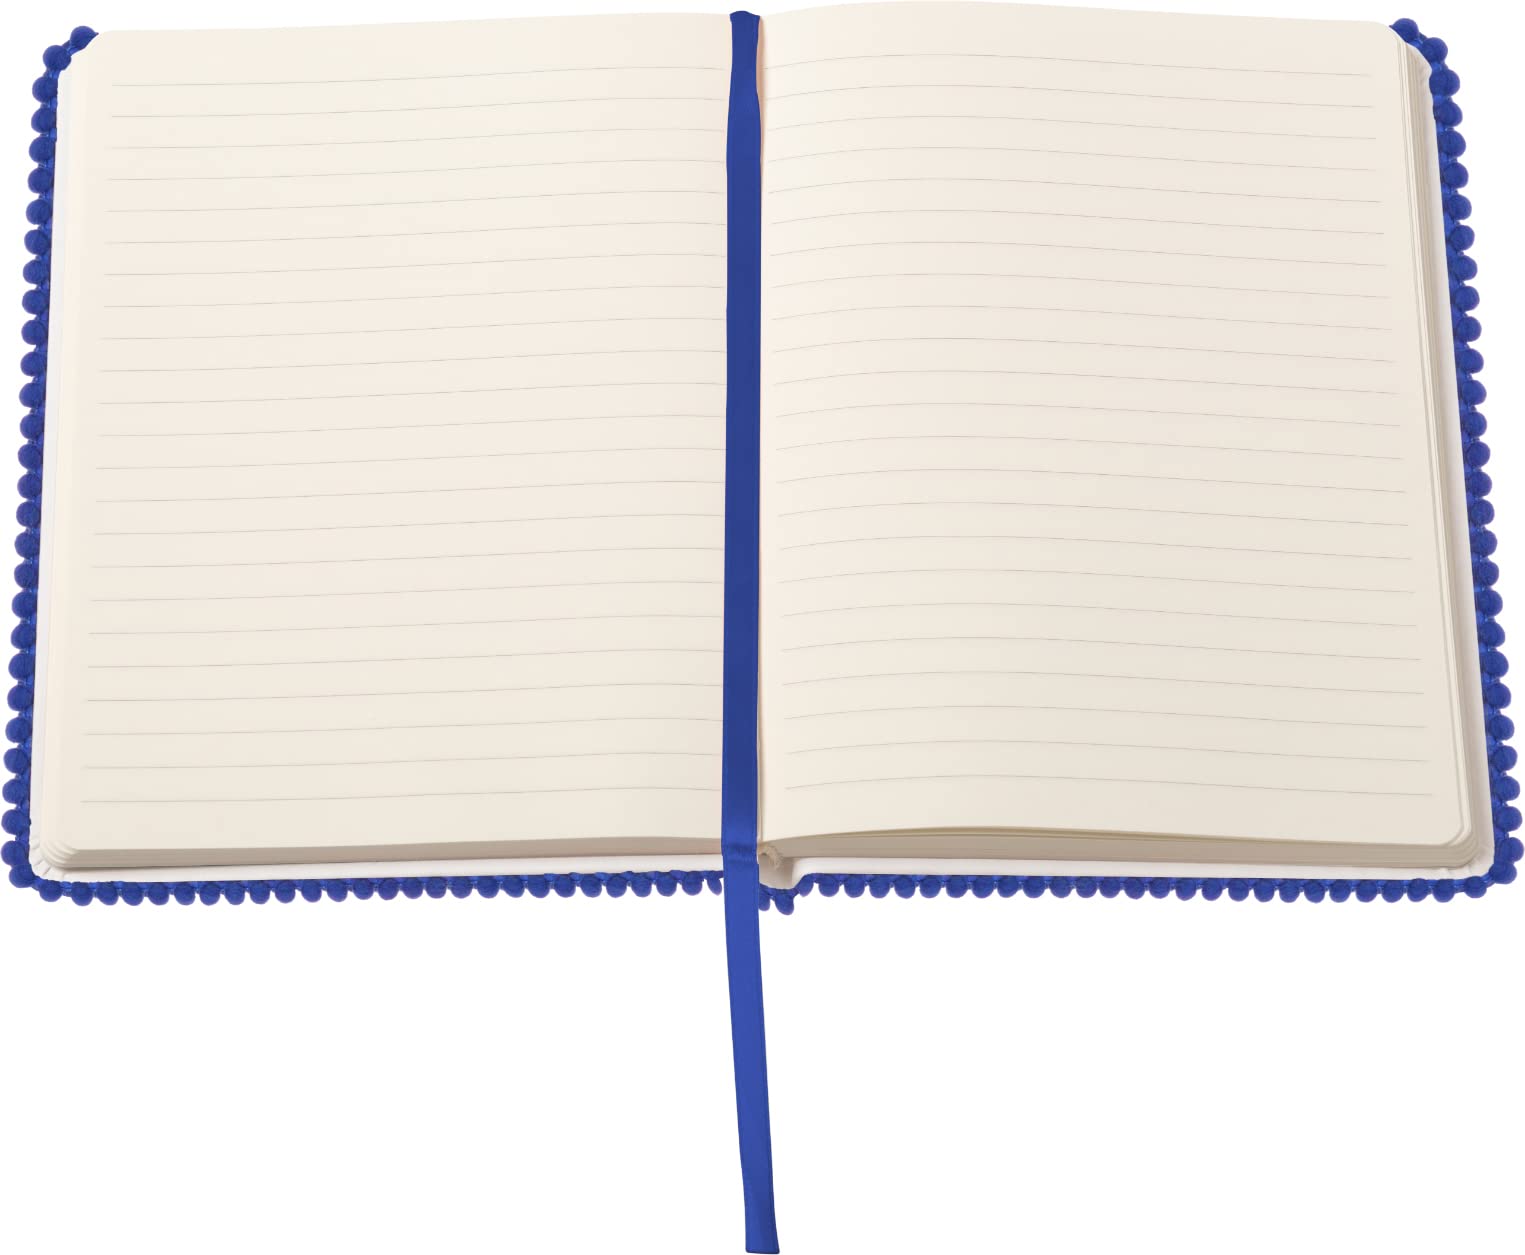 Ribbon Bookmark Lay Flat Notebook